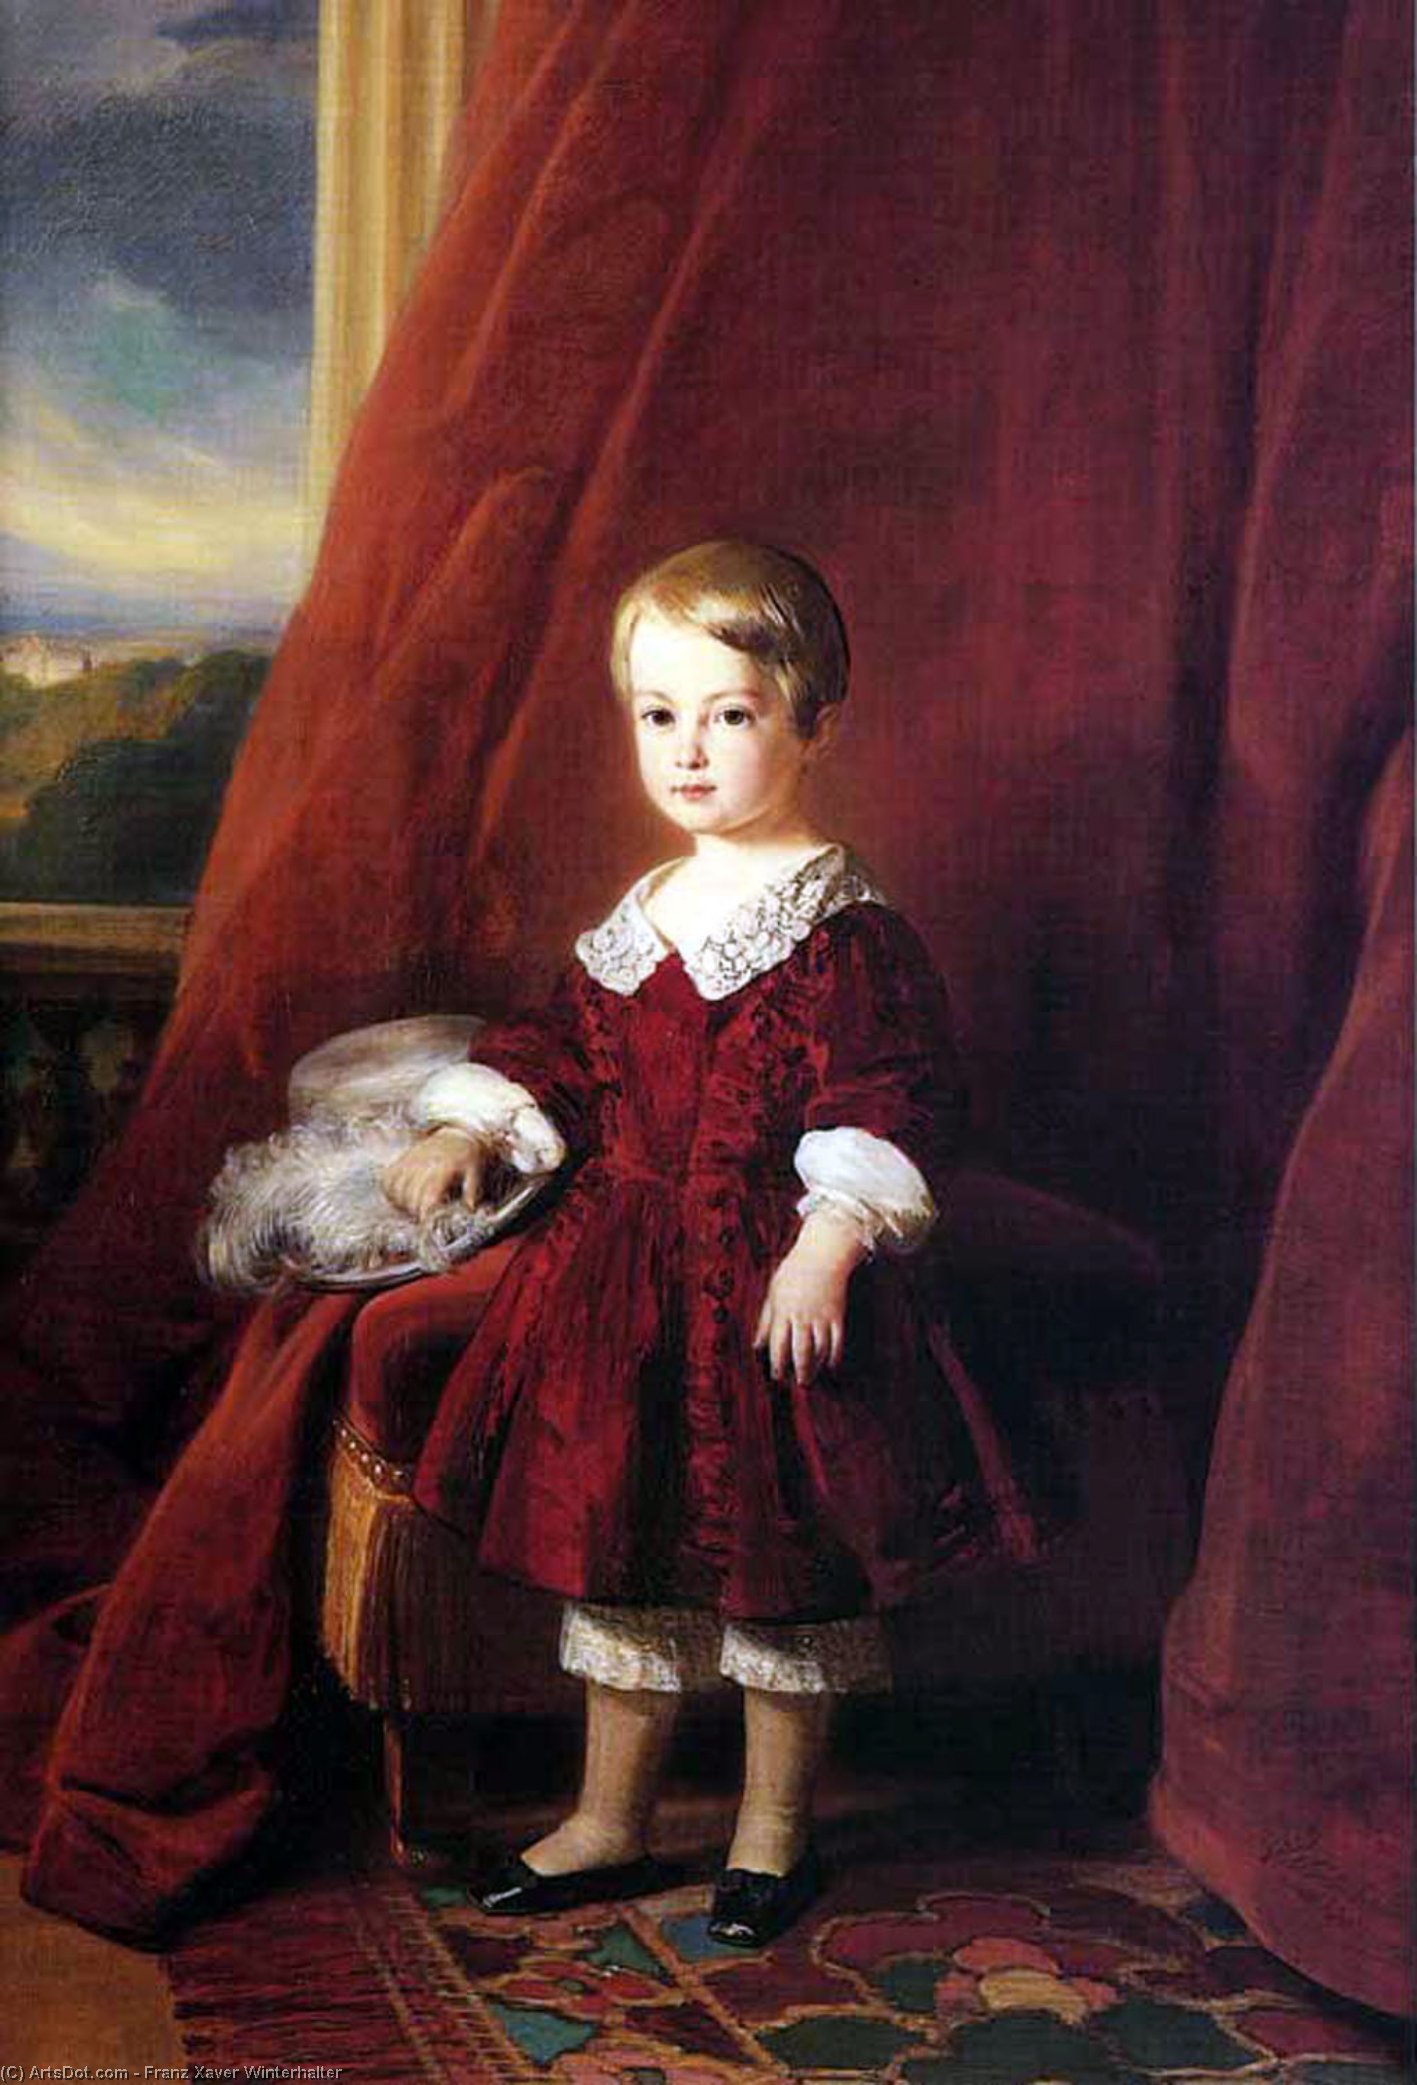 Мальчик 18 века